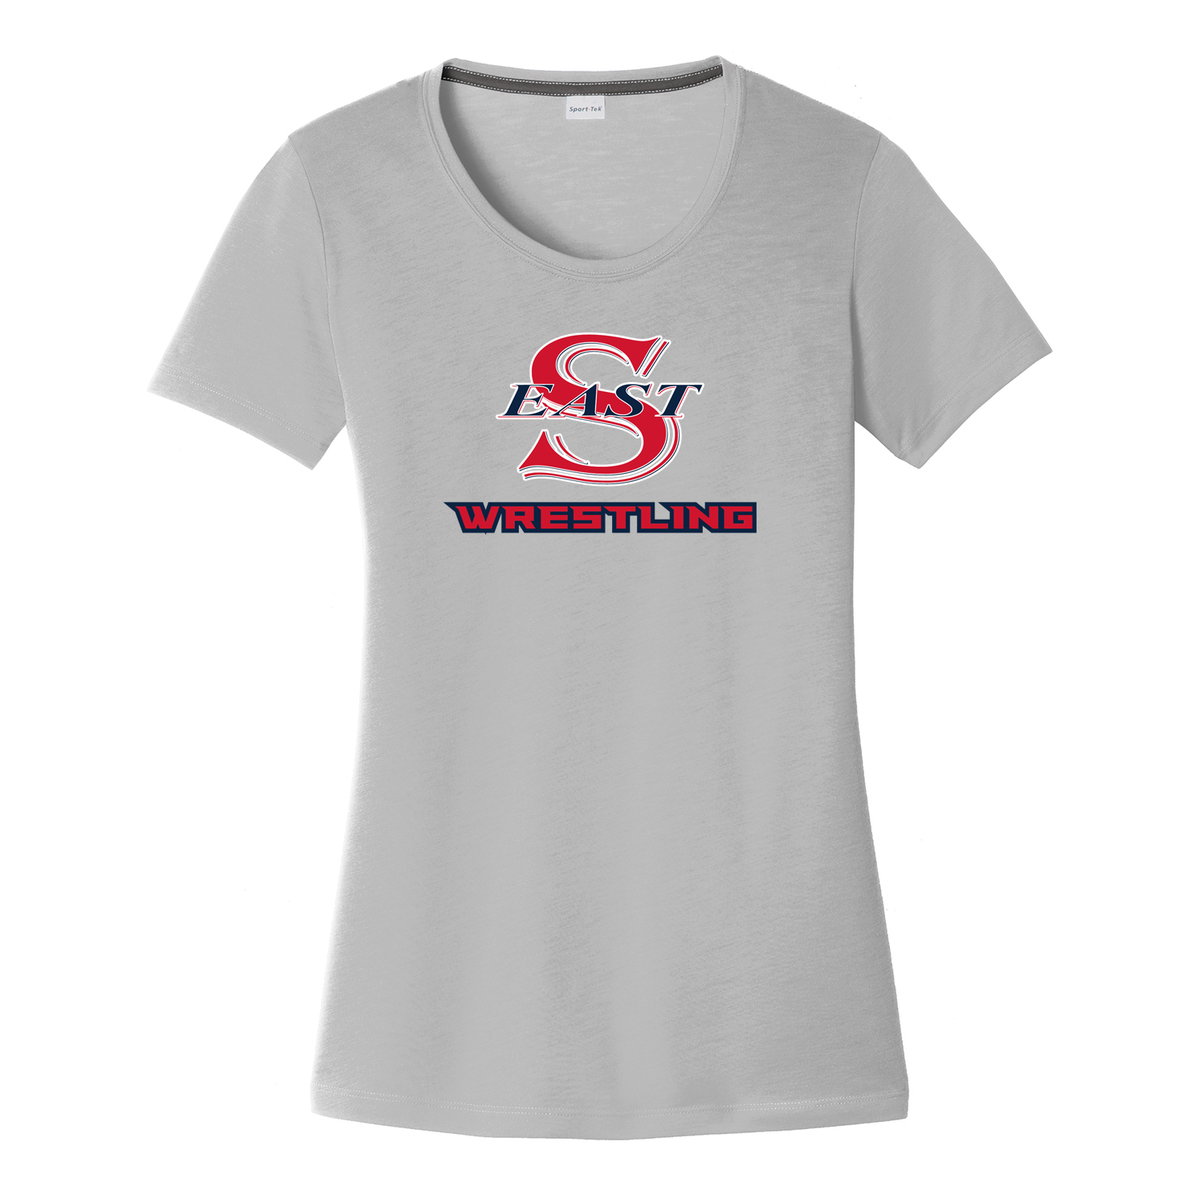 Smithtown East Wrestling Women's CottonTouch Performance T-Shirt